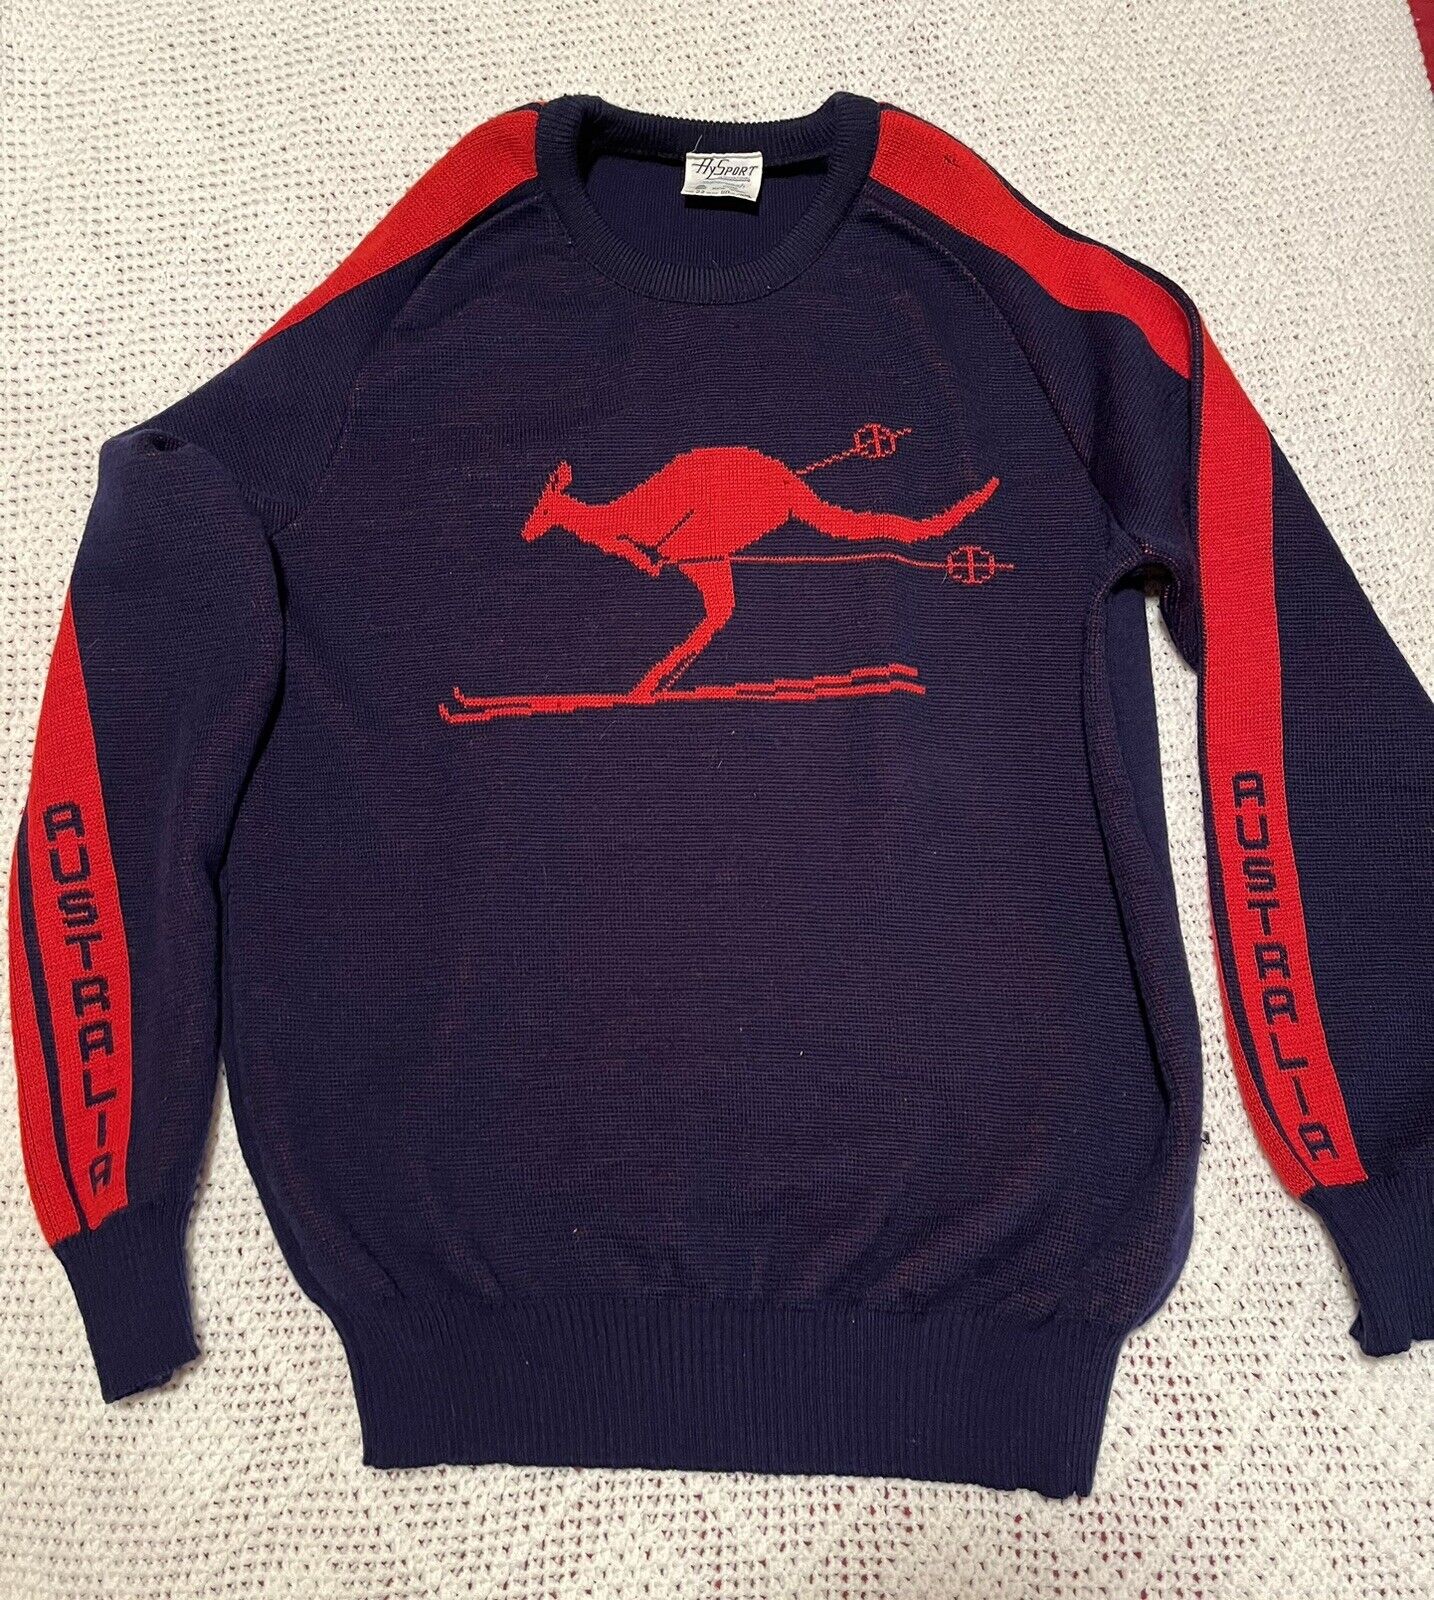 Beastie Boys Mca Adam Yauch Vintage Australian Wool Sweater Size Xxl 22 Hysport